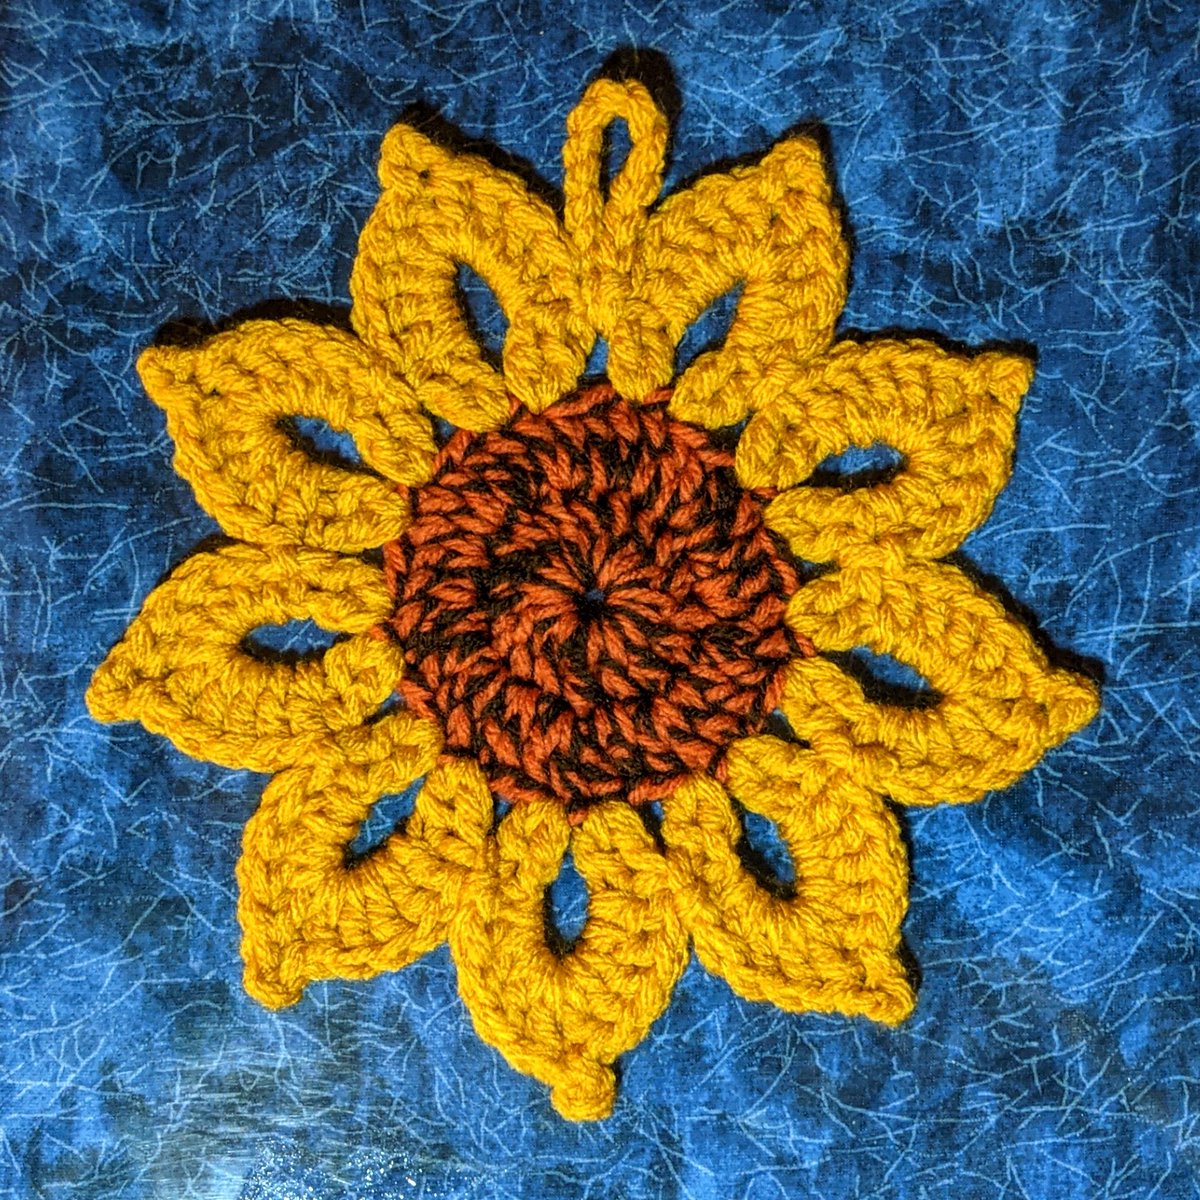 une tournesol - a sunflower

🌻🇺🇦🌻

#SunflowersForUkraine #Ukraine #SlavaUkraini #StandWithUkraine
#crochet